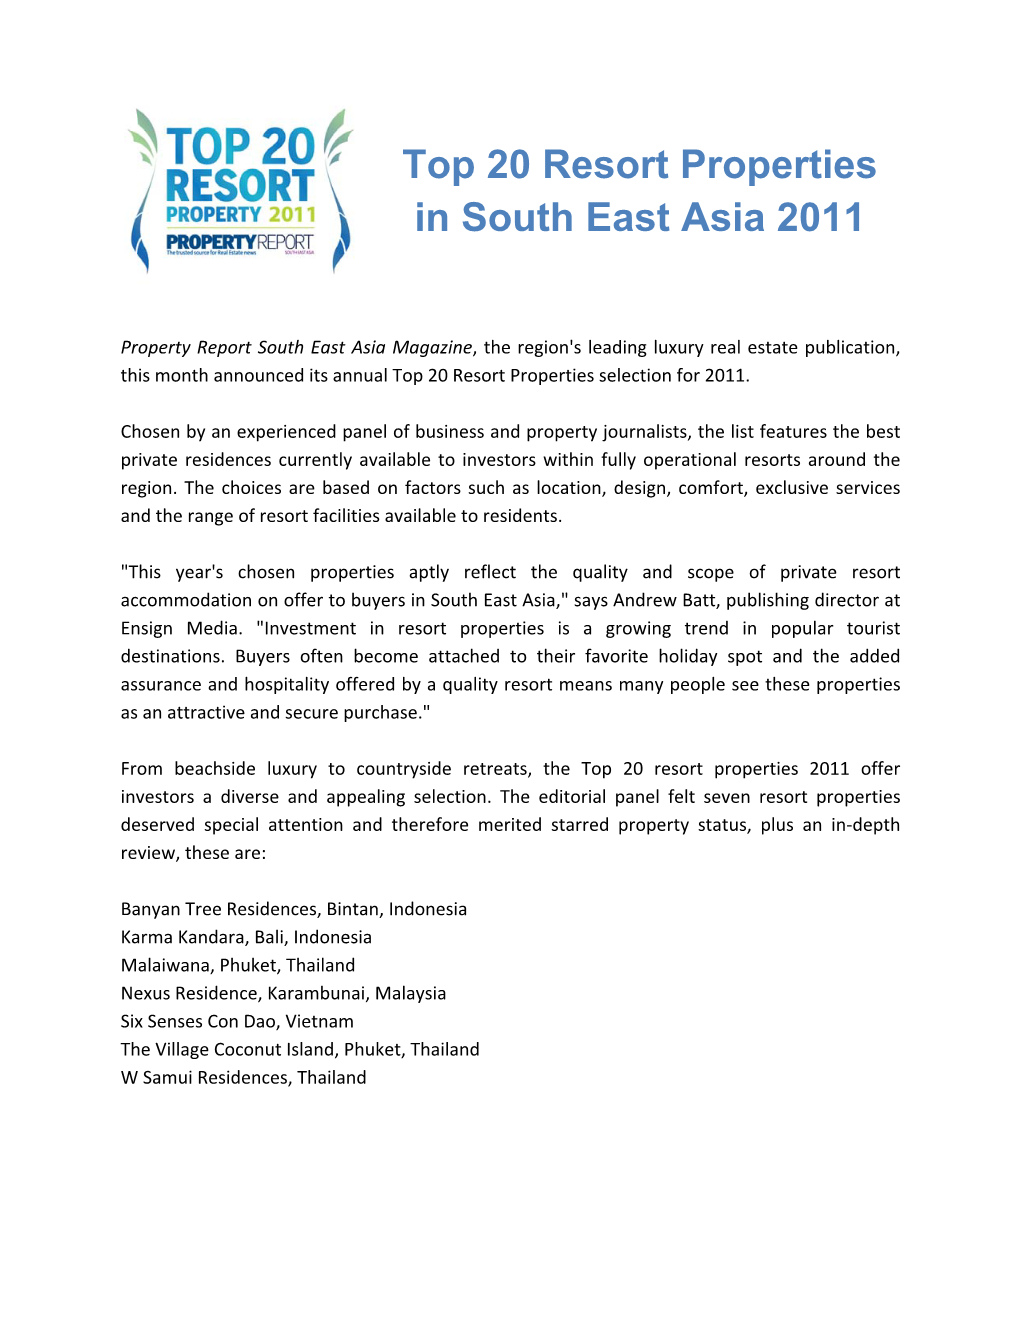 Top 20 Resort Properties in South East Asia 2011